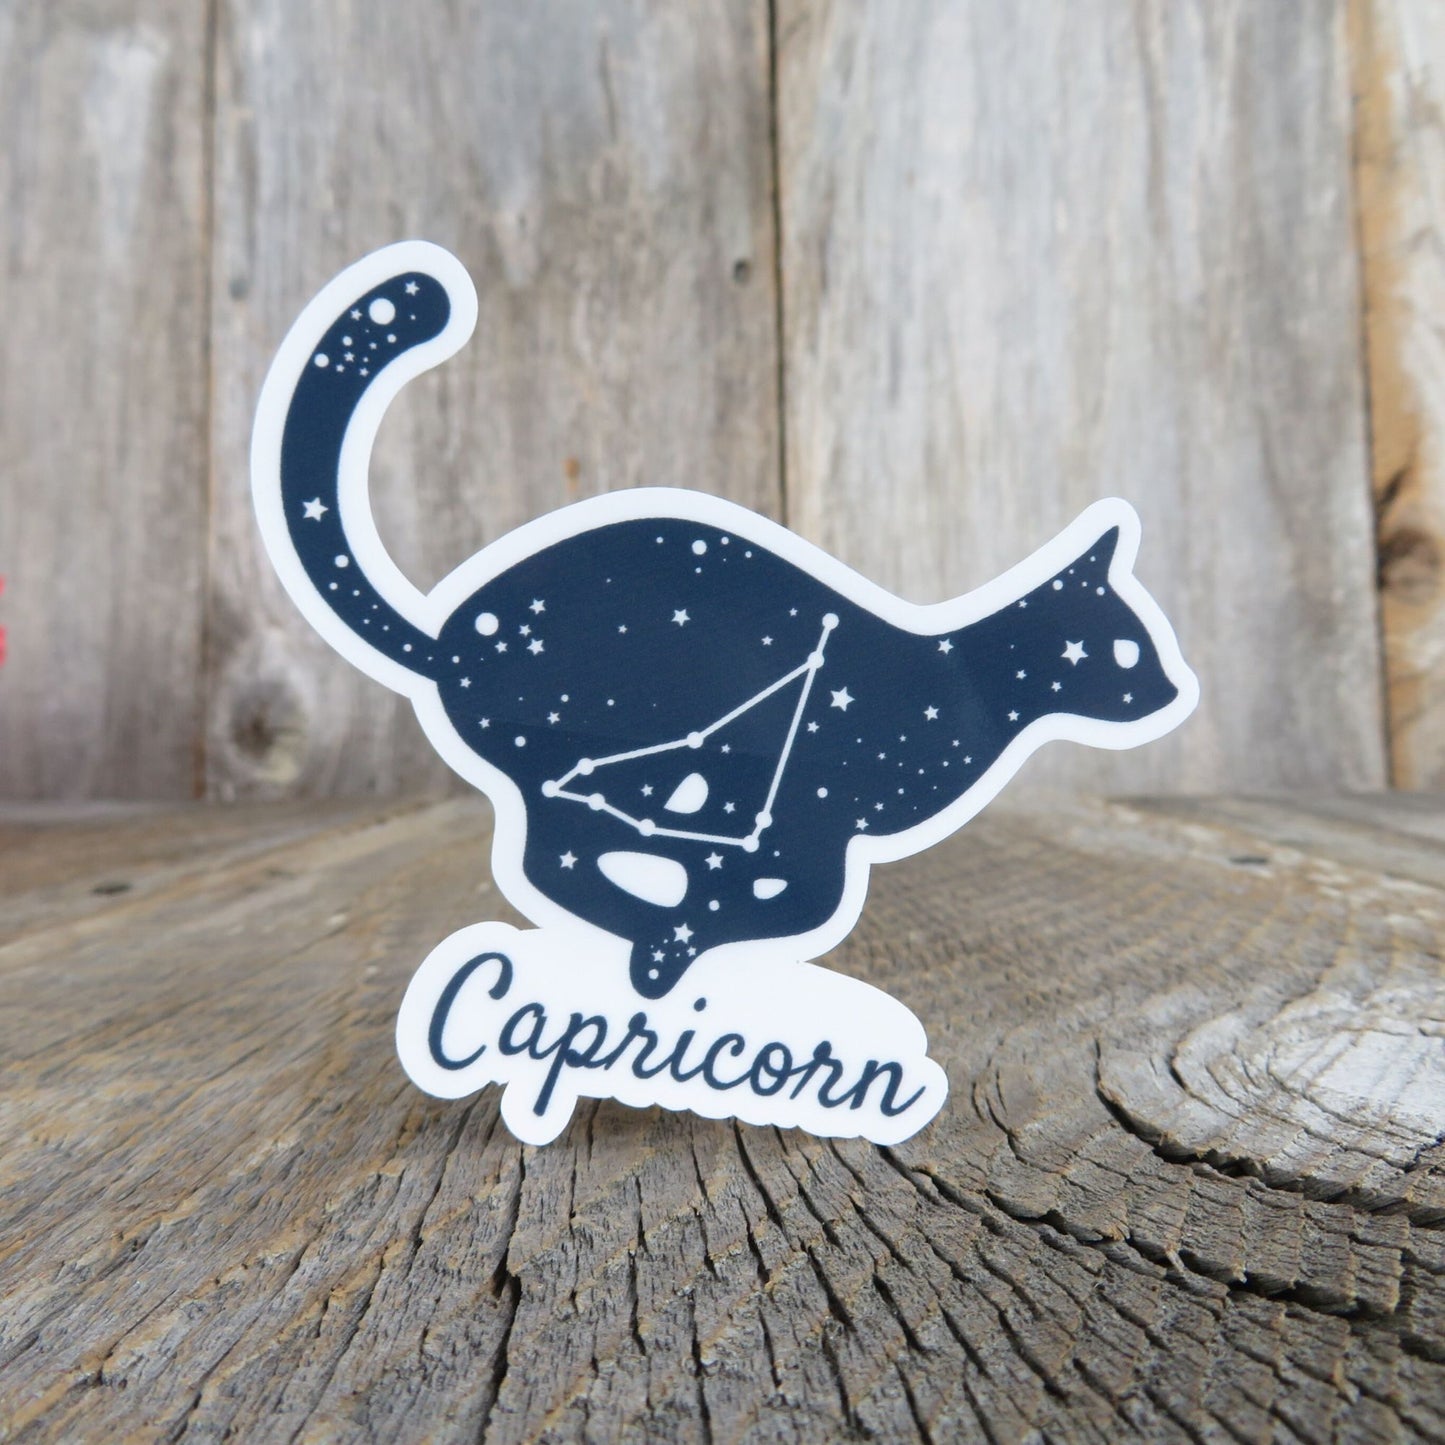 Capricorn Cat Sticker Astrology Birthday Star Sign Waterproof Star Chart